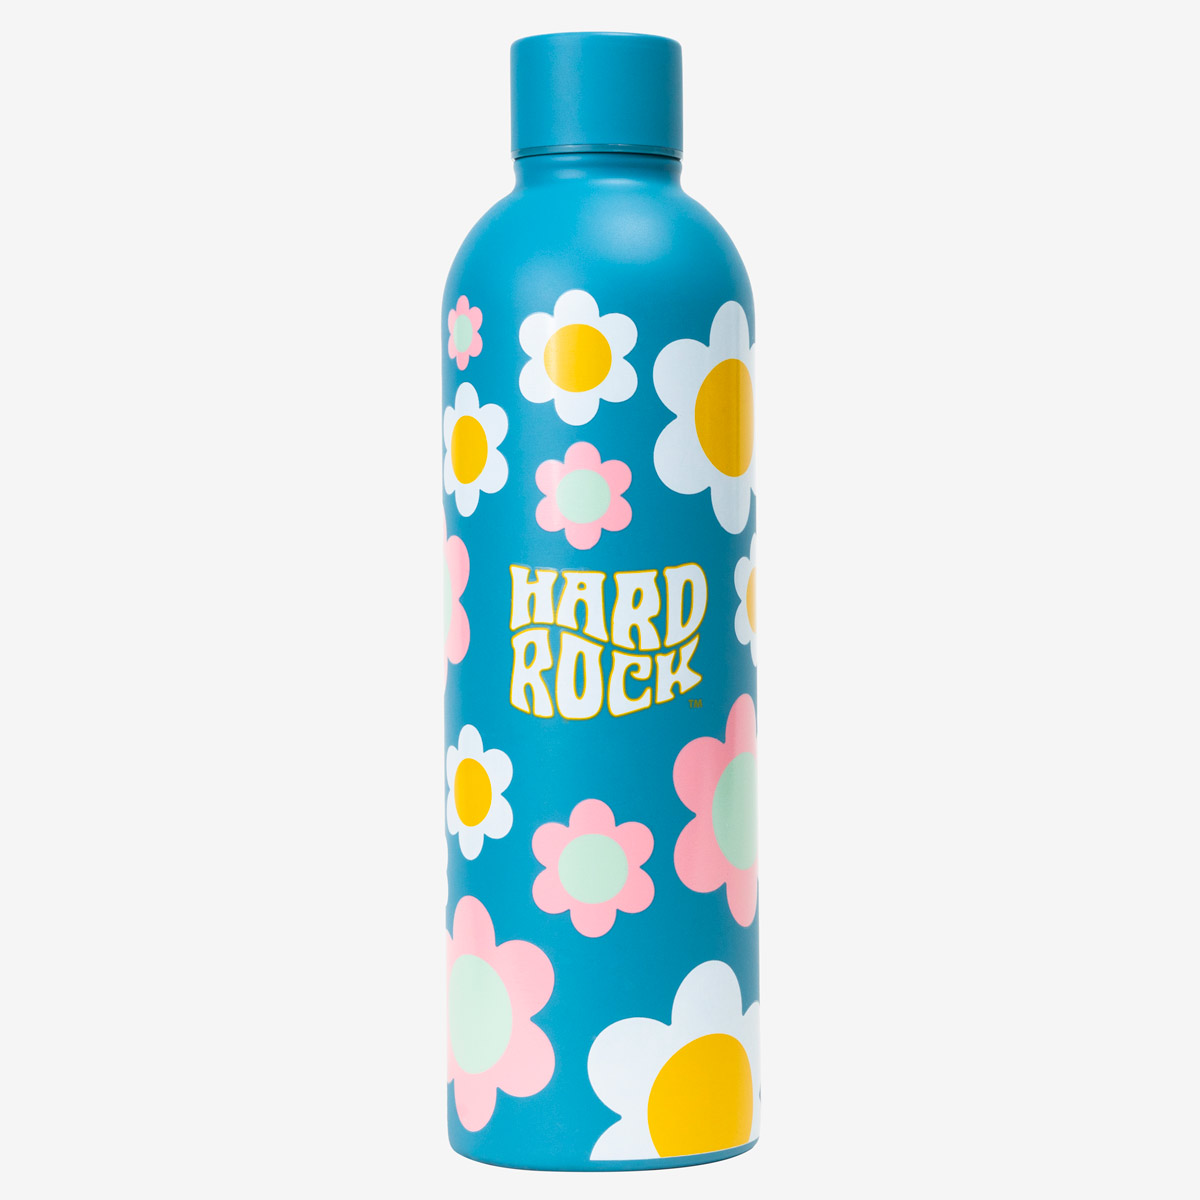 Hard Rock Music Festival Flower Power Water Bottle in Blue image number 2